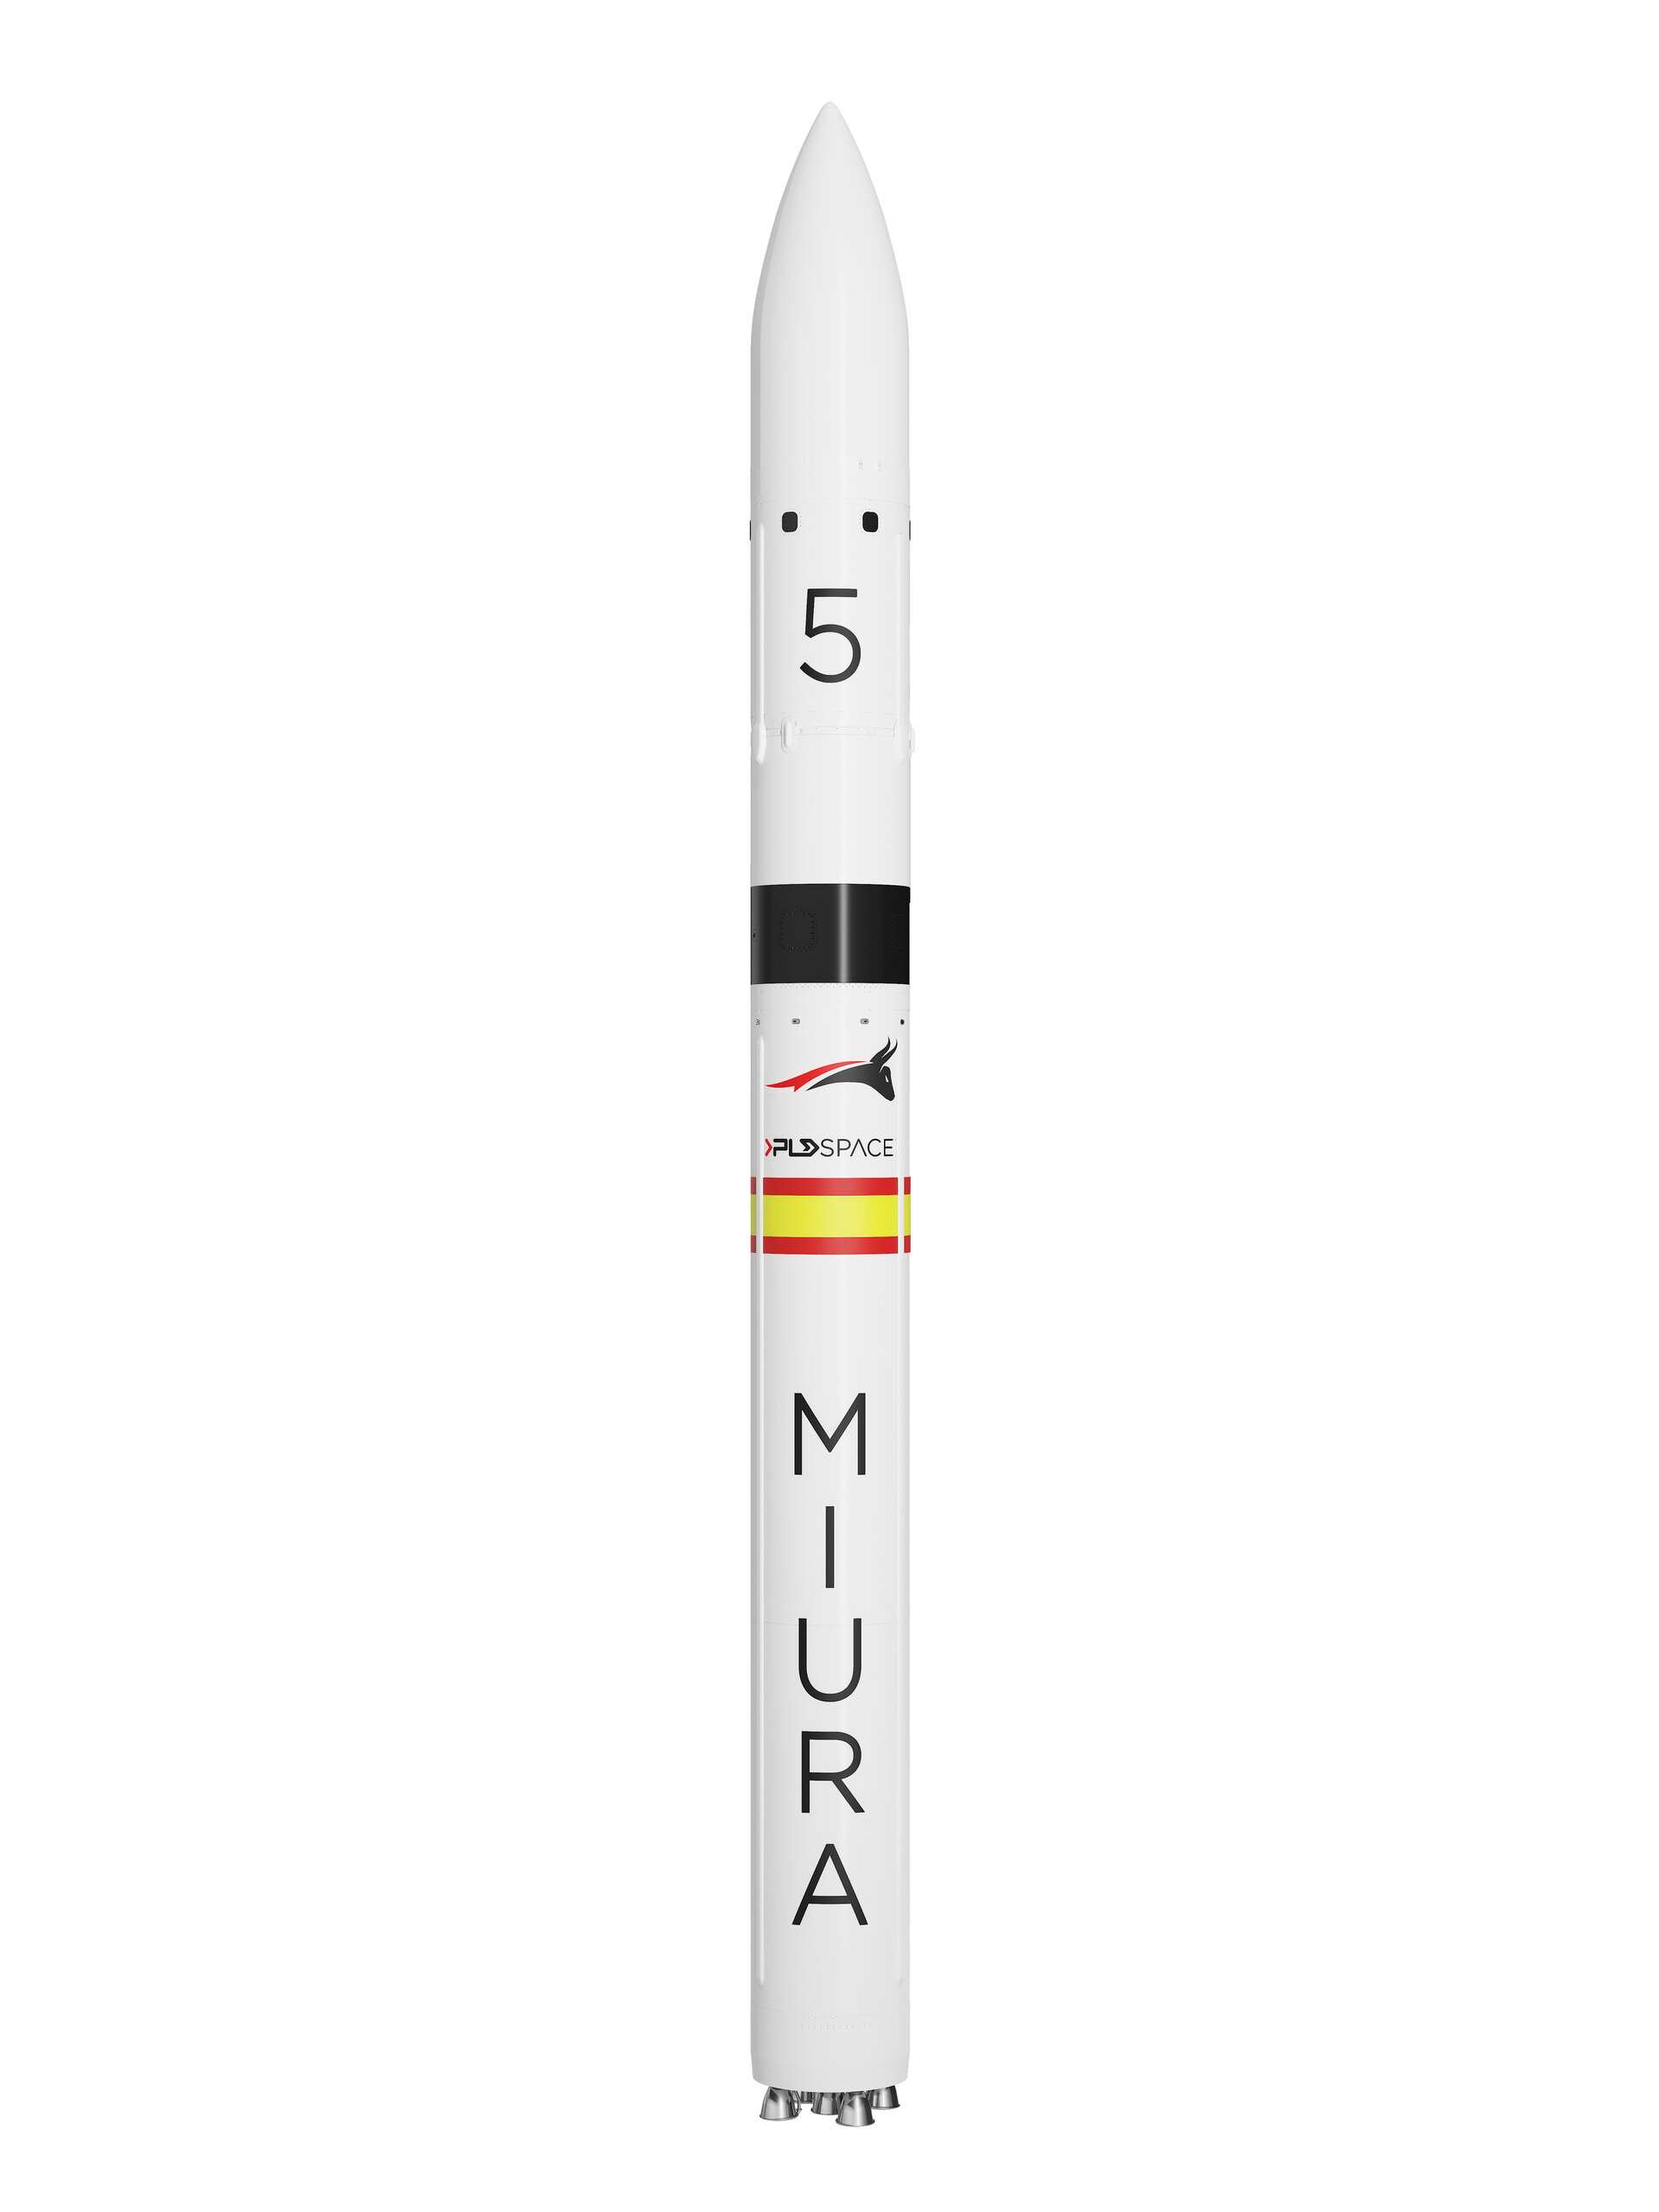 Miura 5 dedicated launches for small satellites